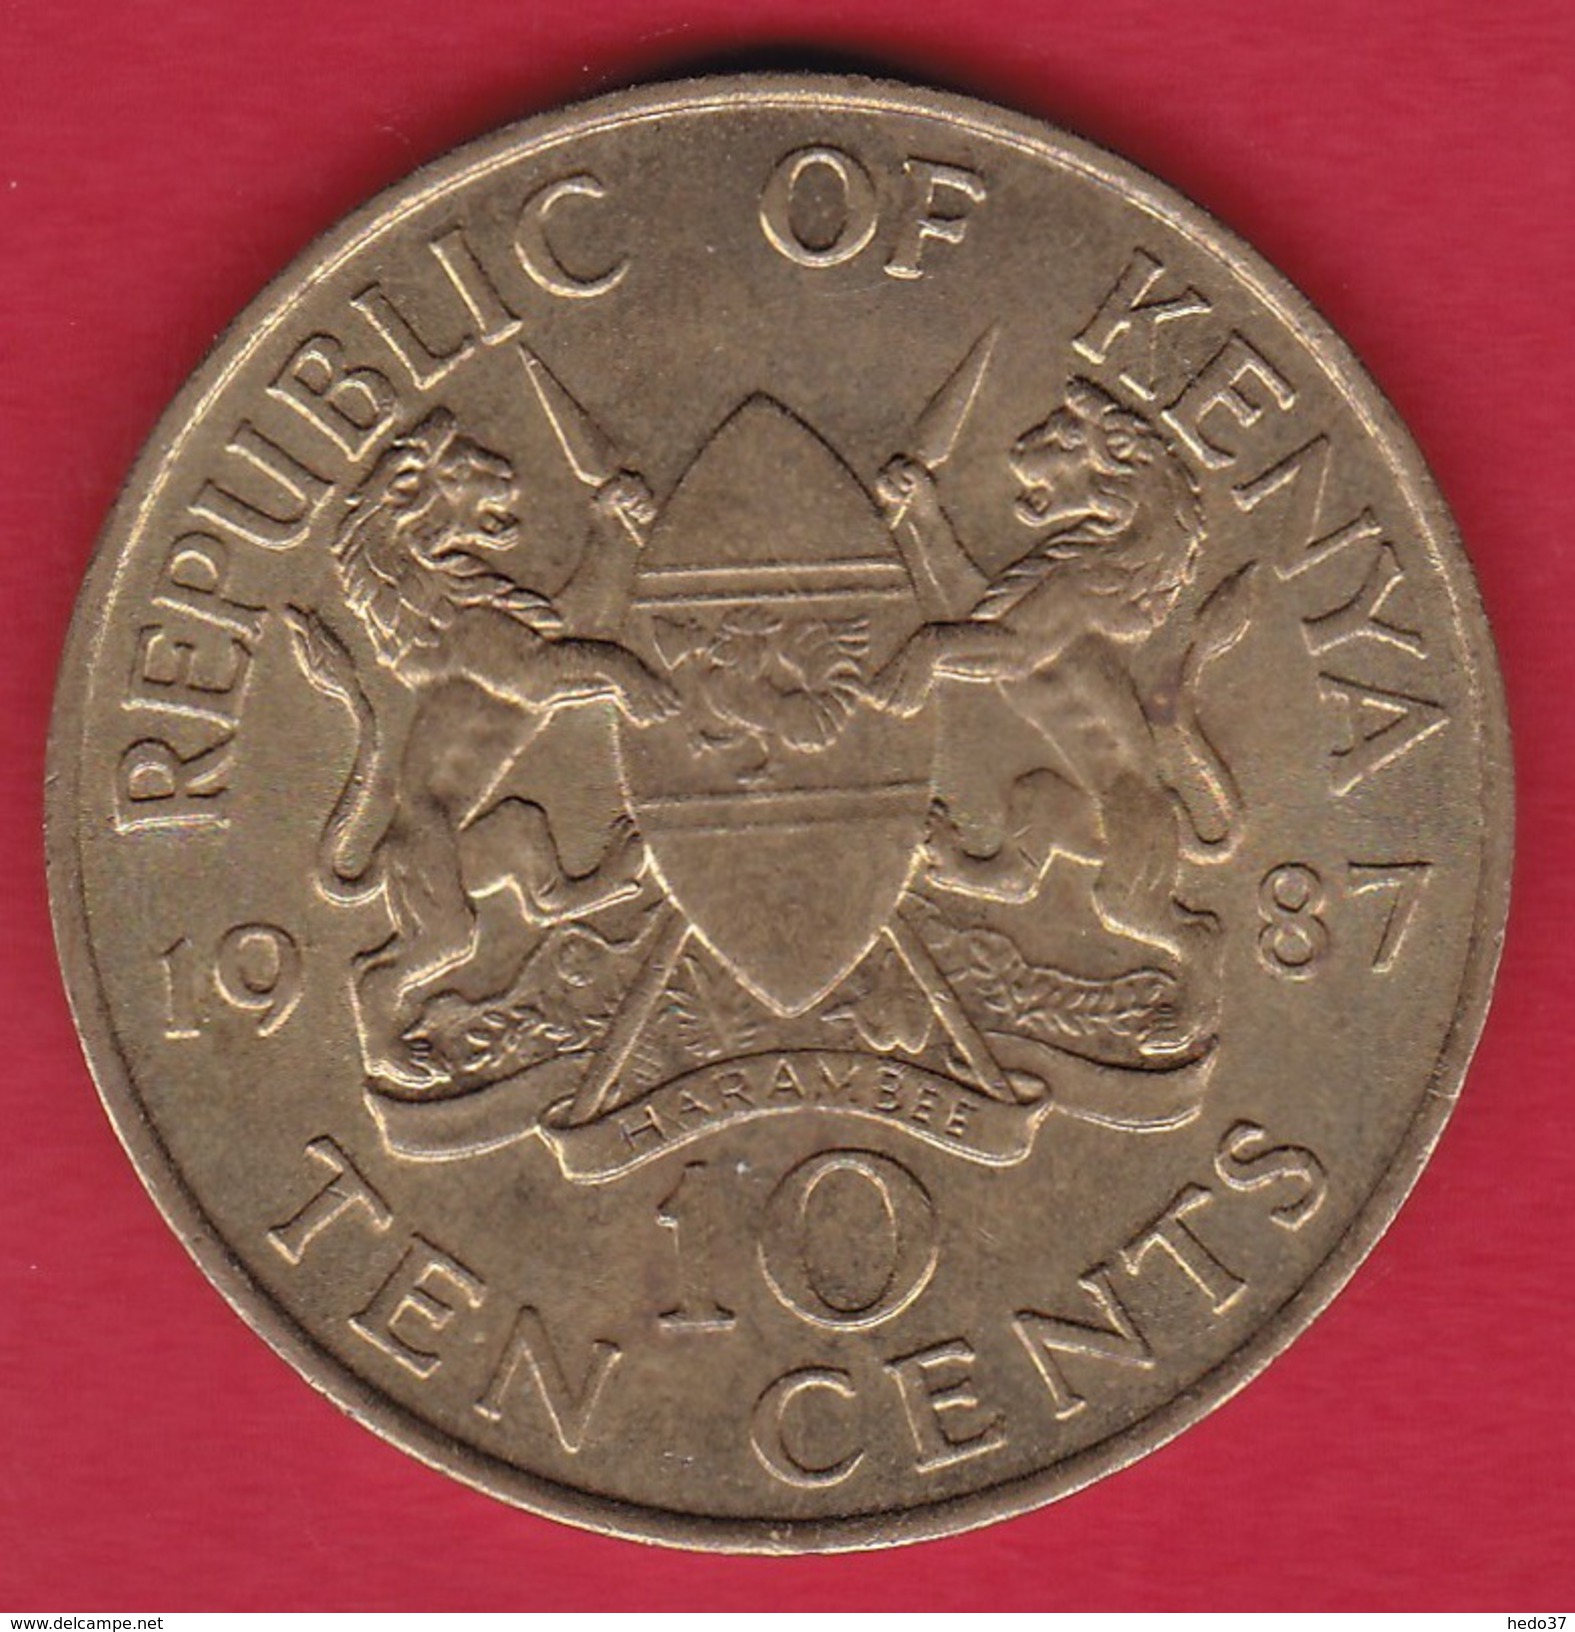 Kenya - 10 Cents - 1987 - Kenya